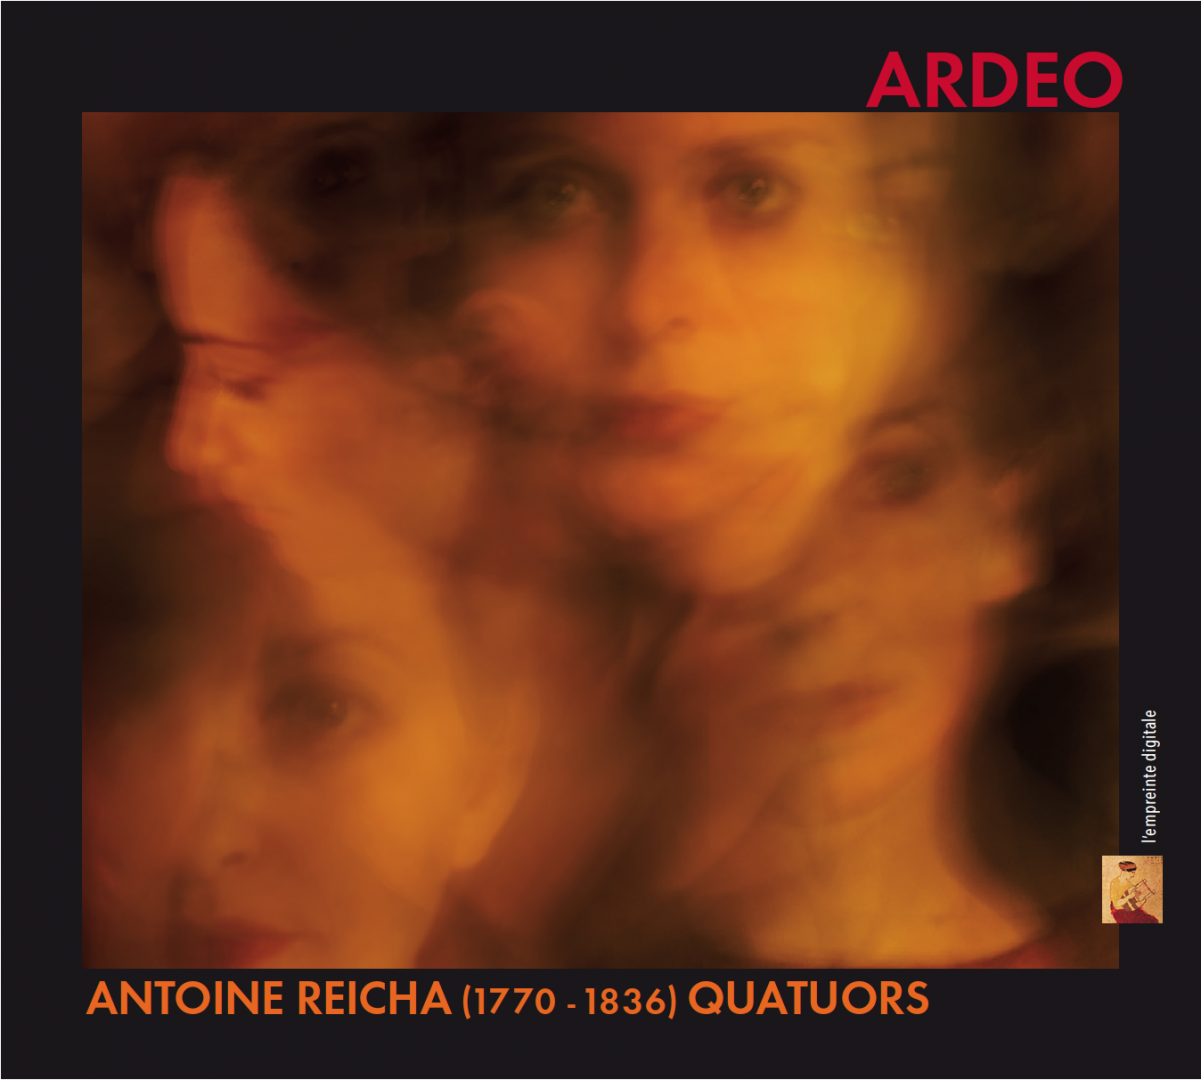 Anton Reicha (1770-1836) Three quartets